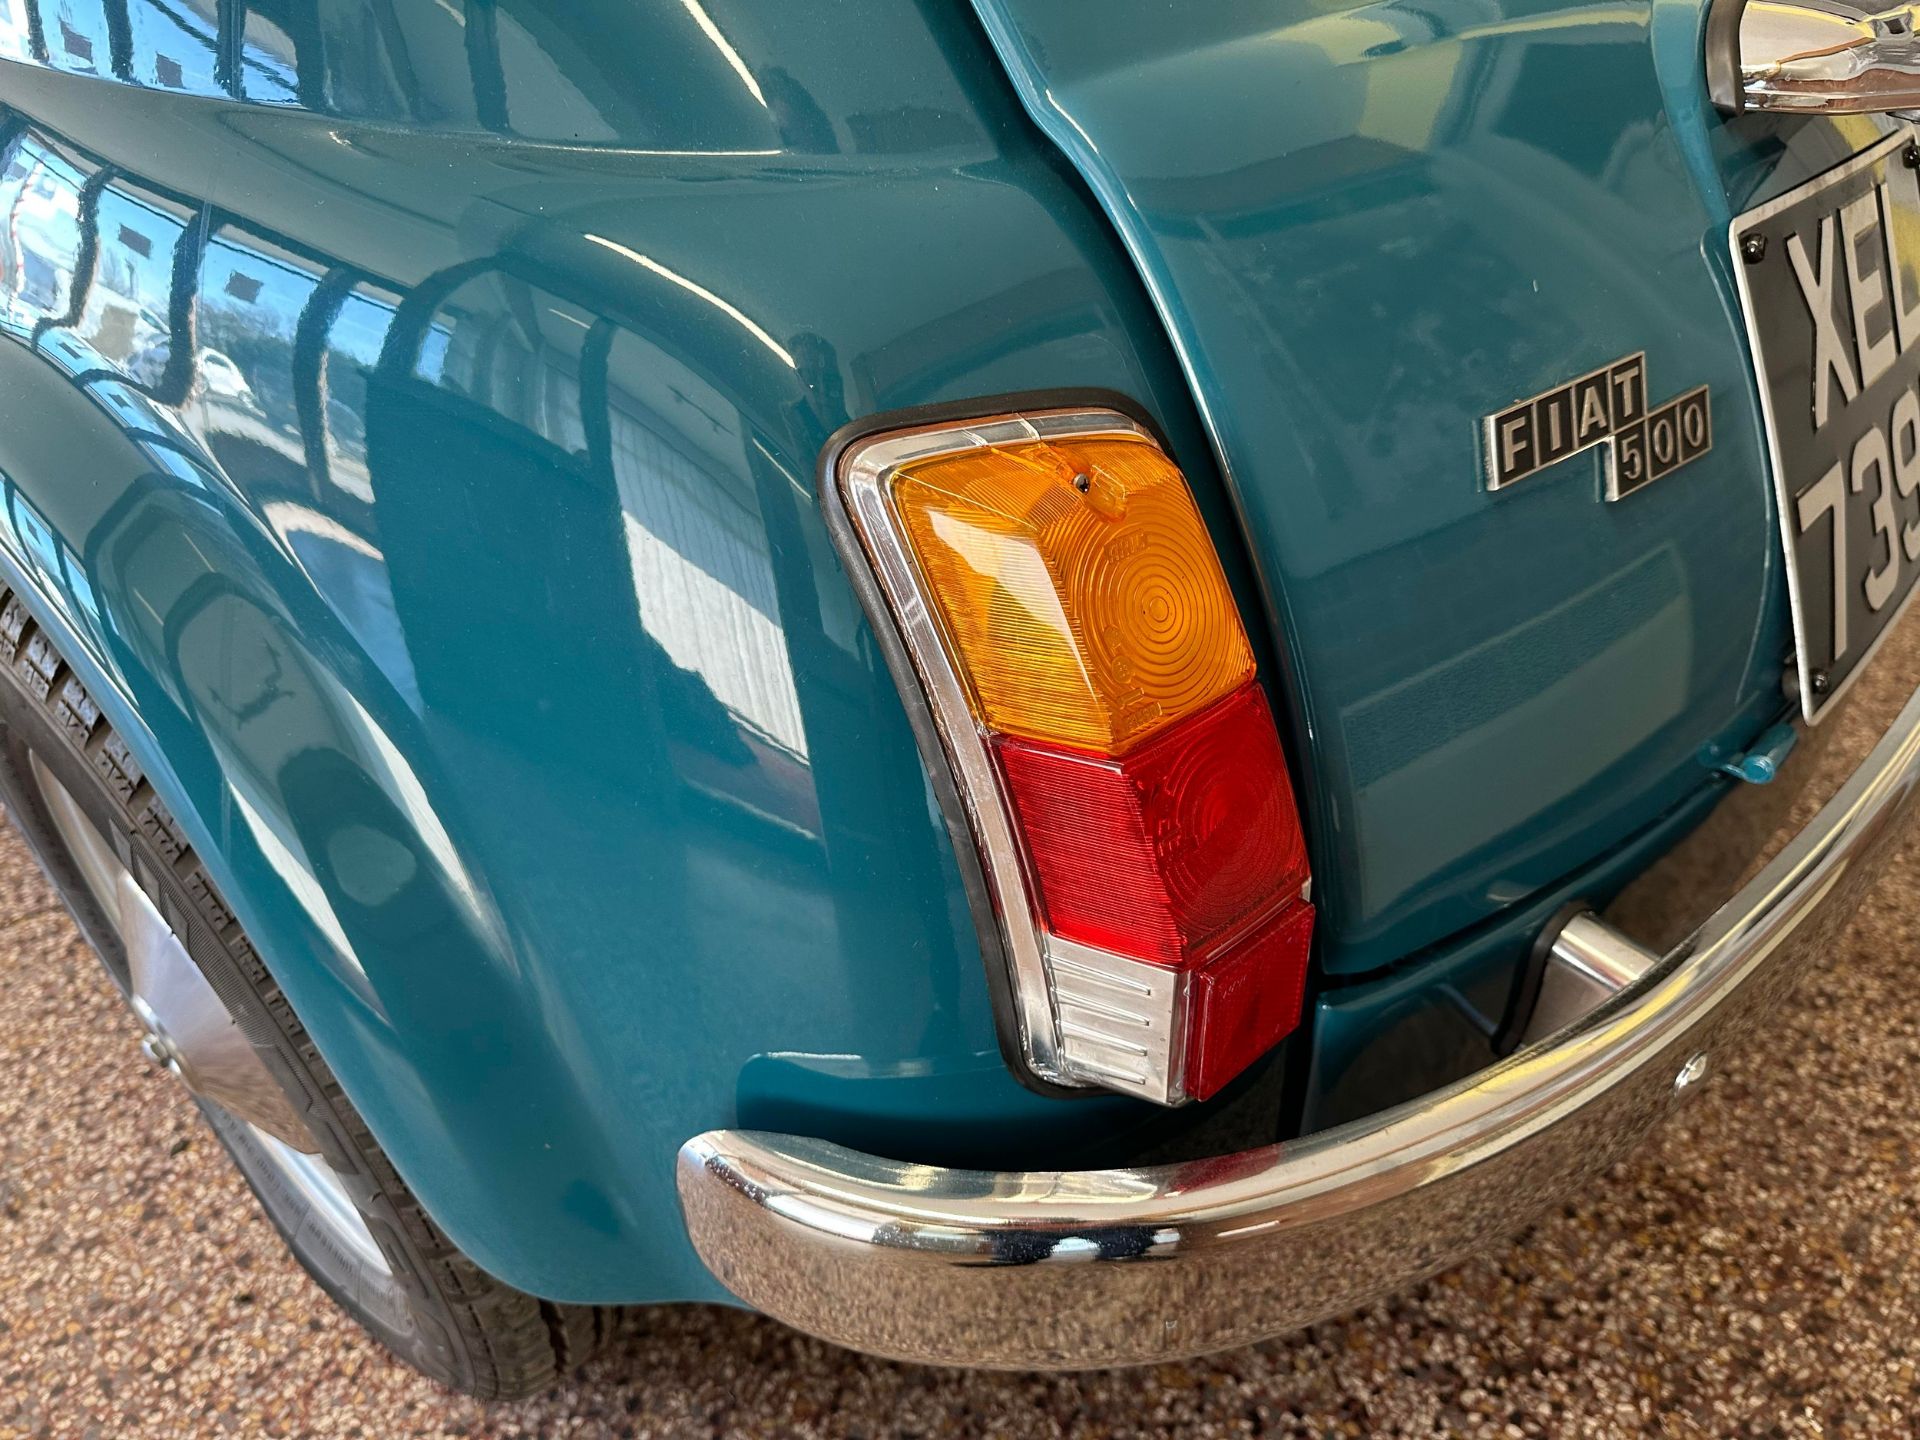 1971 Fiat 500F Registration number XEL 739K Chassis number 2872841 Engine number 3096678 - Image 63 of 73